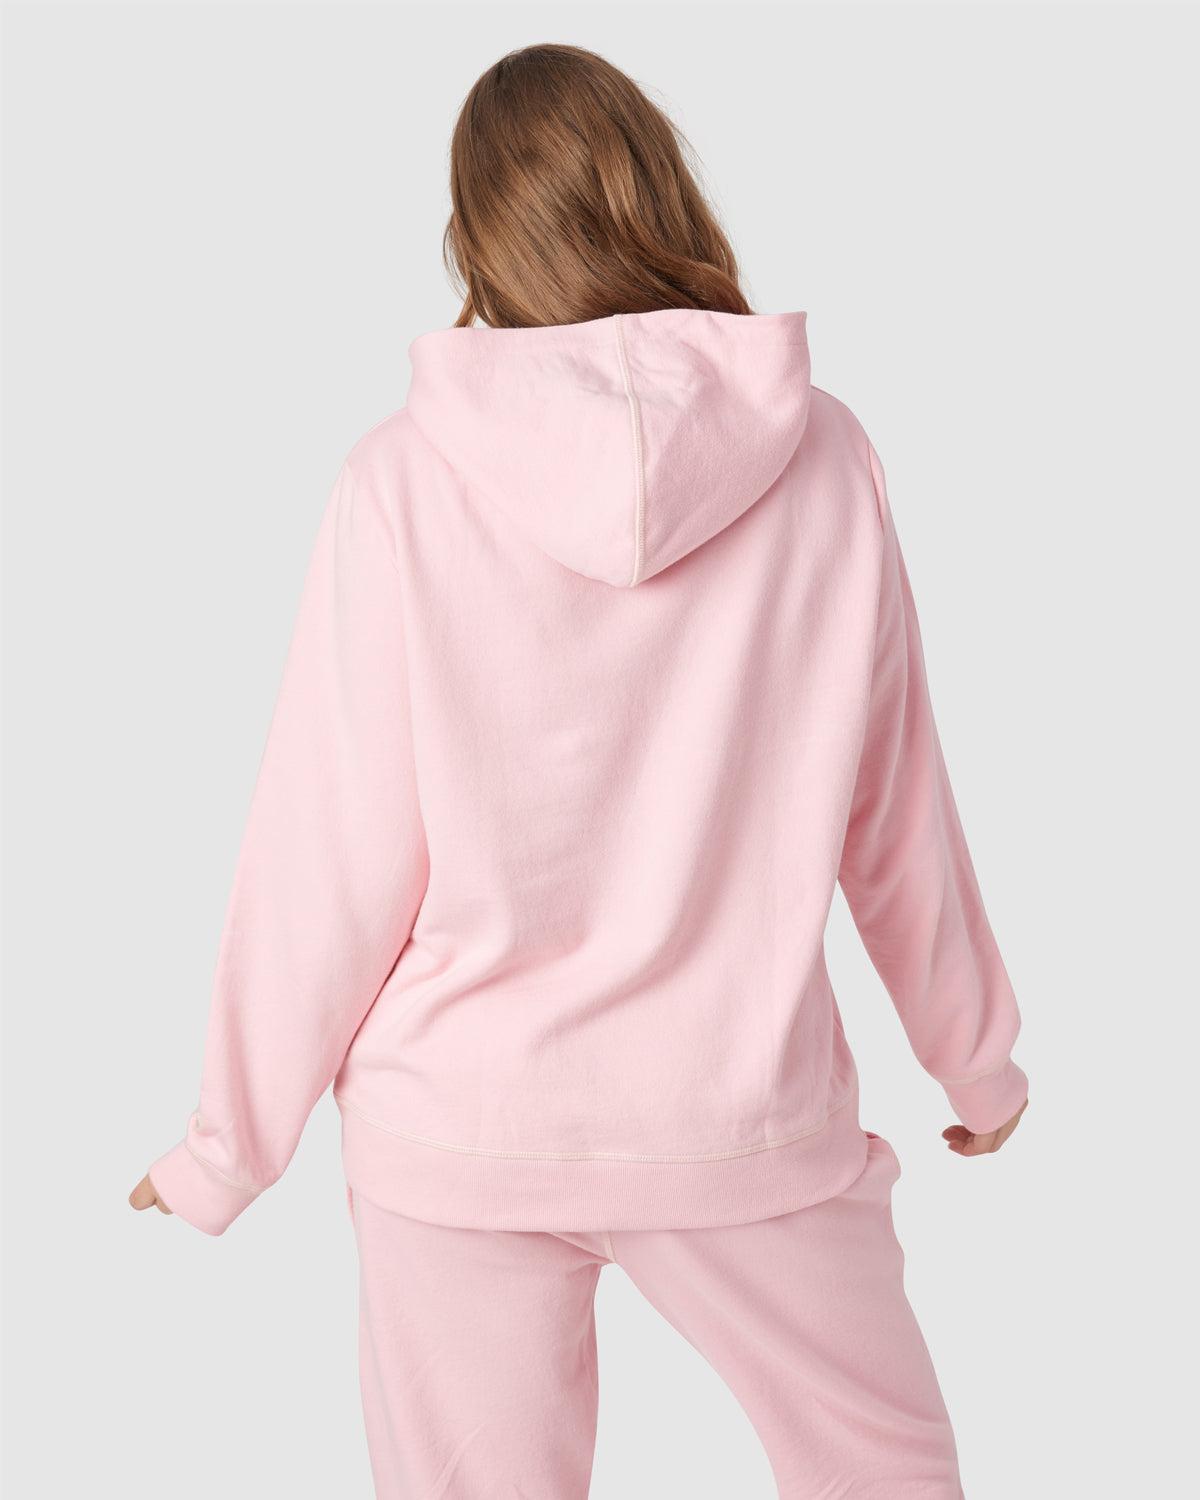 New Balance Unisex Logo Sweatshirt In Pink ASOS, 47% OFF